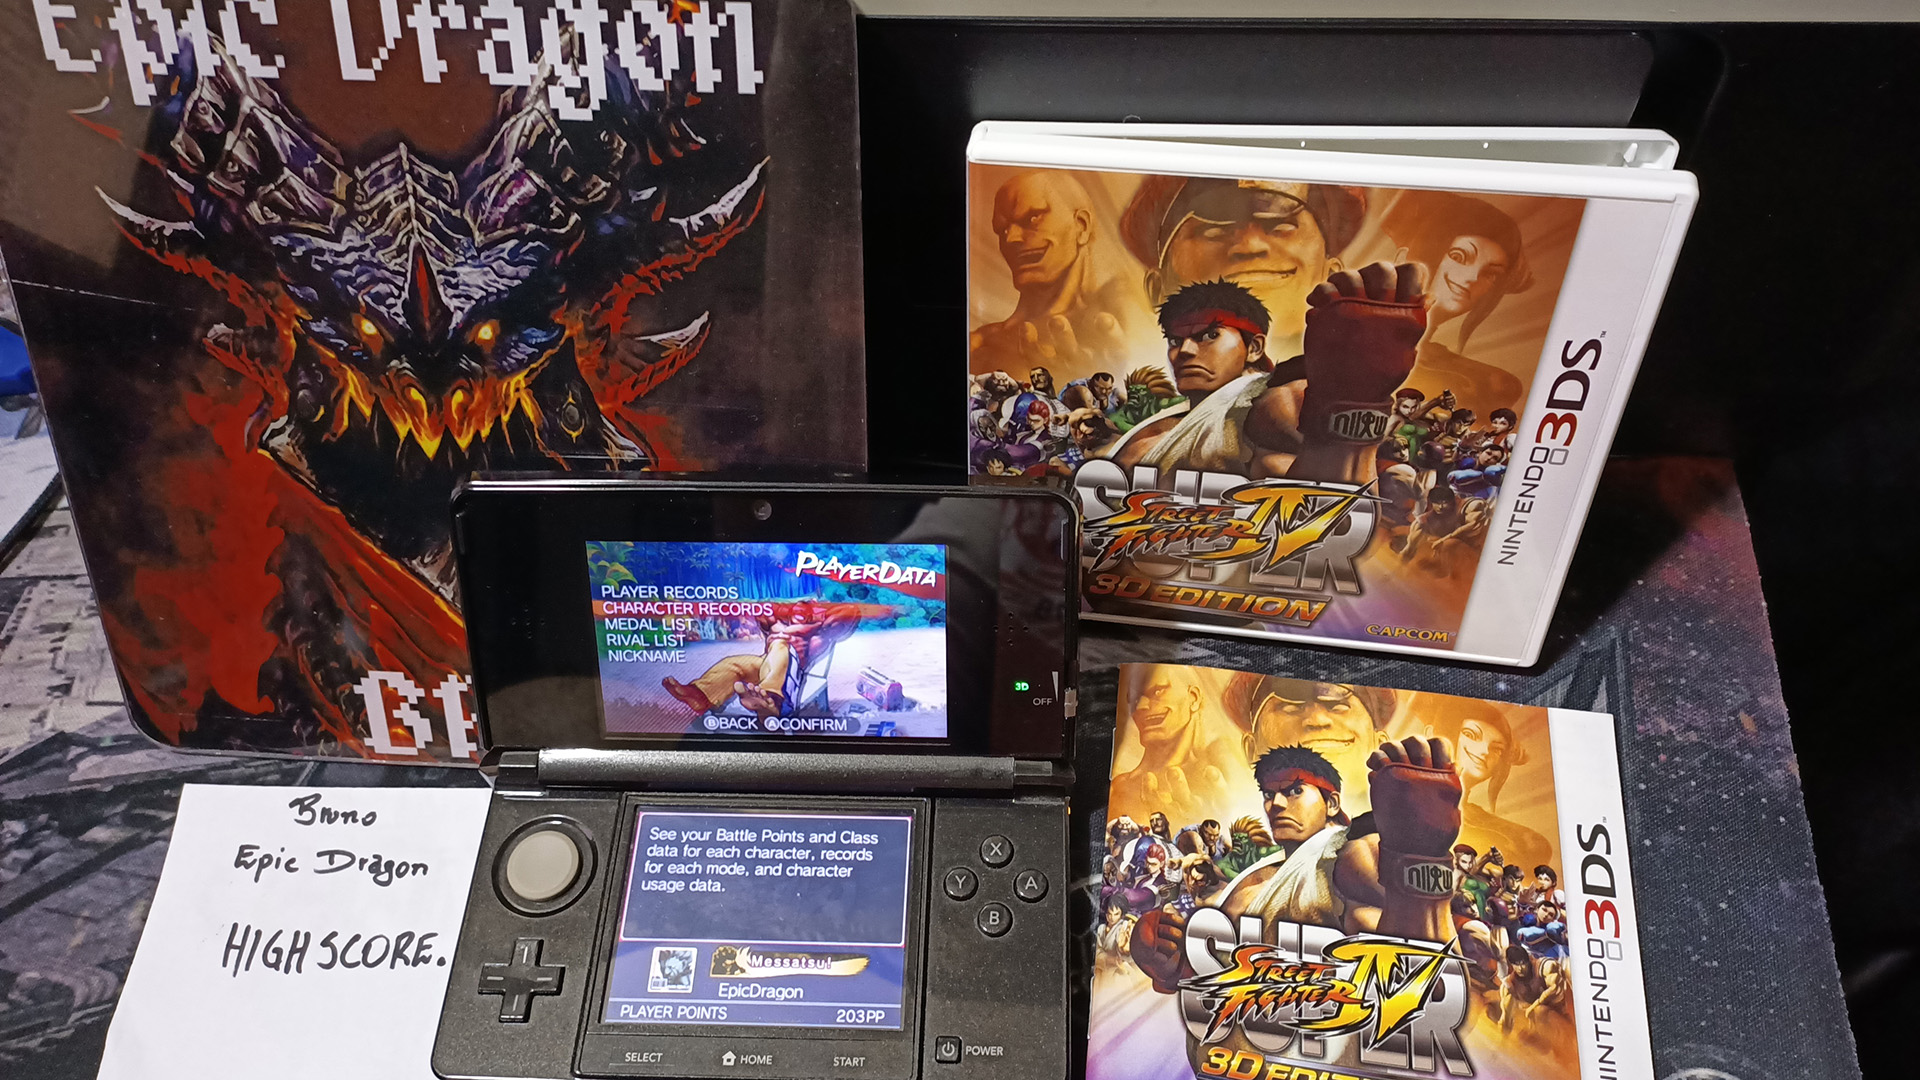 EpicDragon: Super Street Fighter IV 3D Edition: Arcade: Vega [Balrog in Japanese Version] (Nintendo 3DS) 1,083,100 points on 2022-08-28 12:13:26